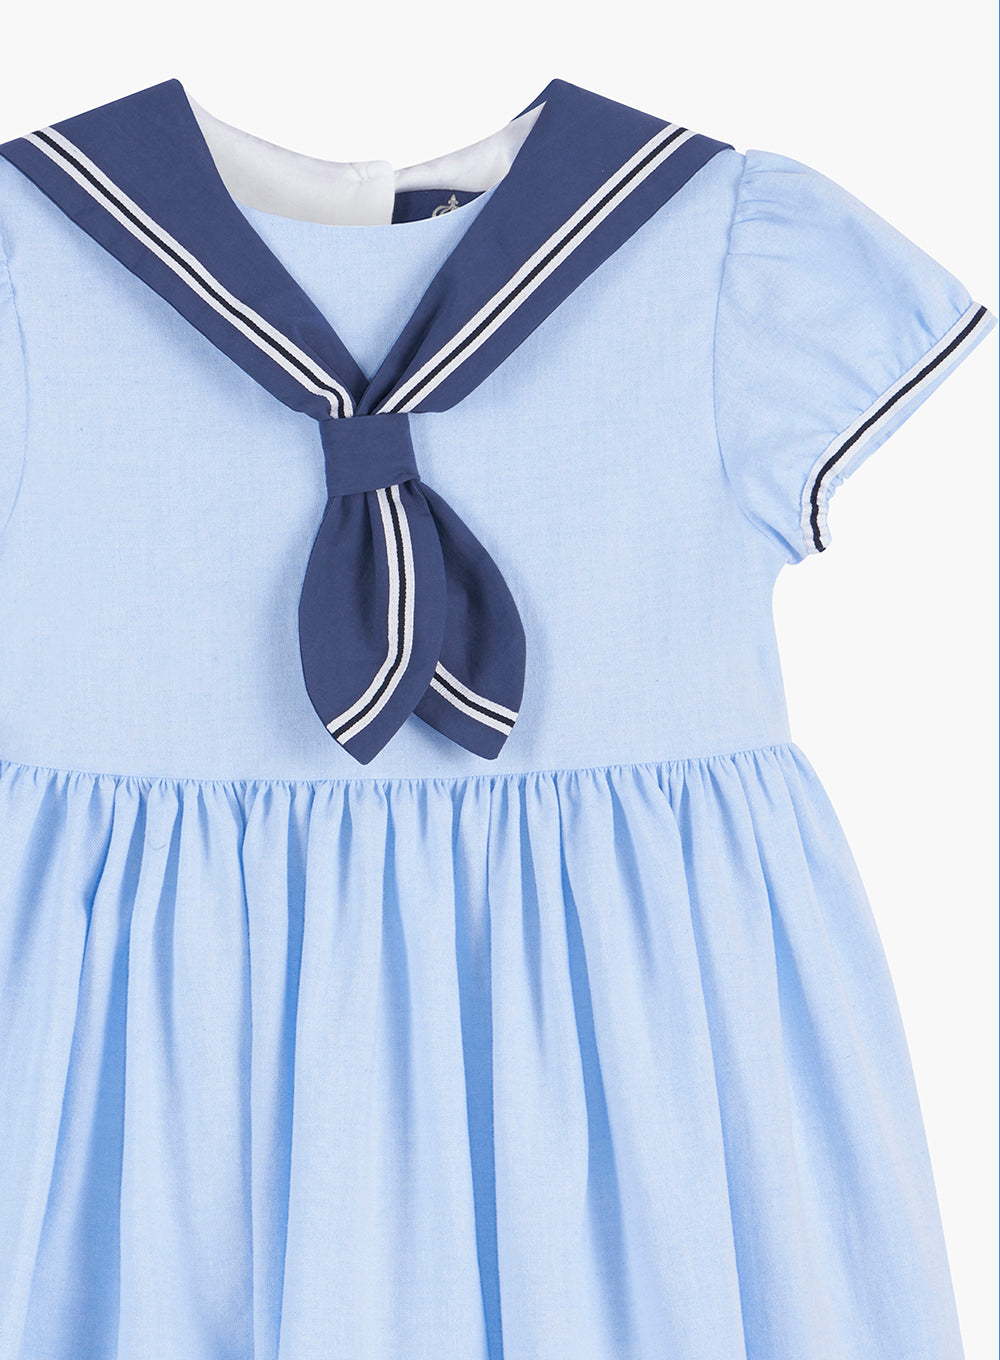 Philippa Sailor Dress in Pale Blue